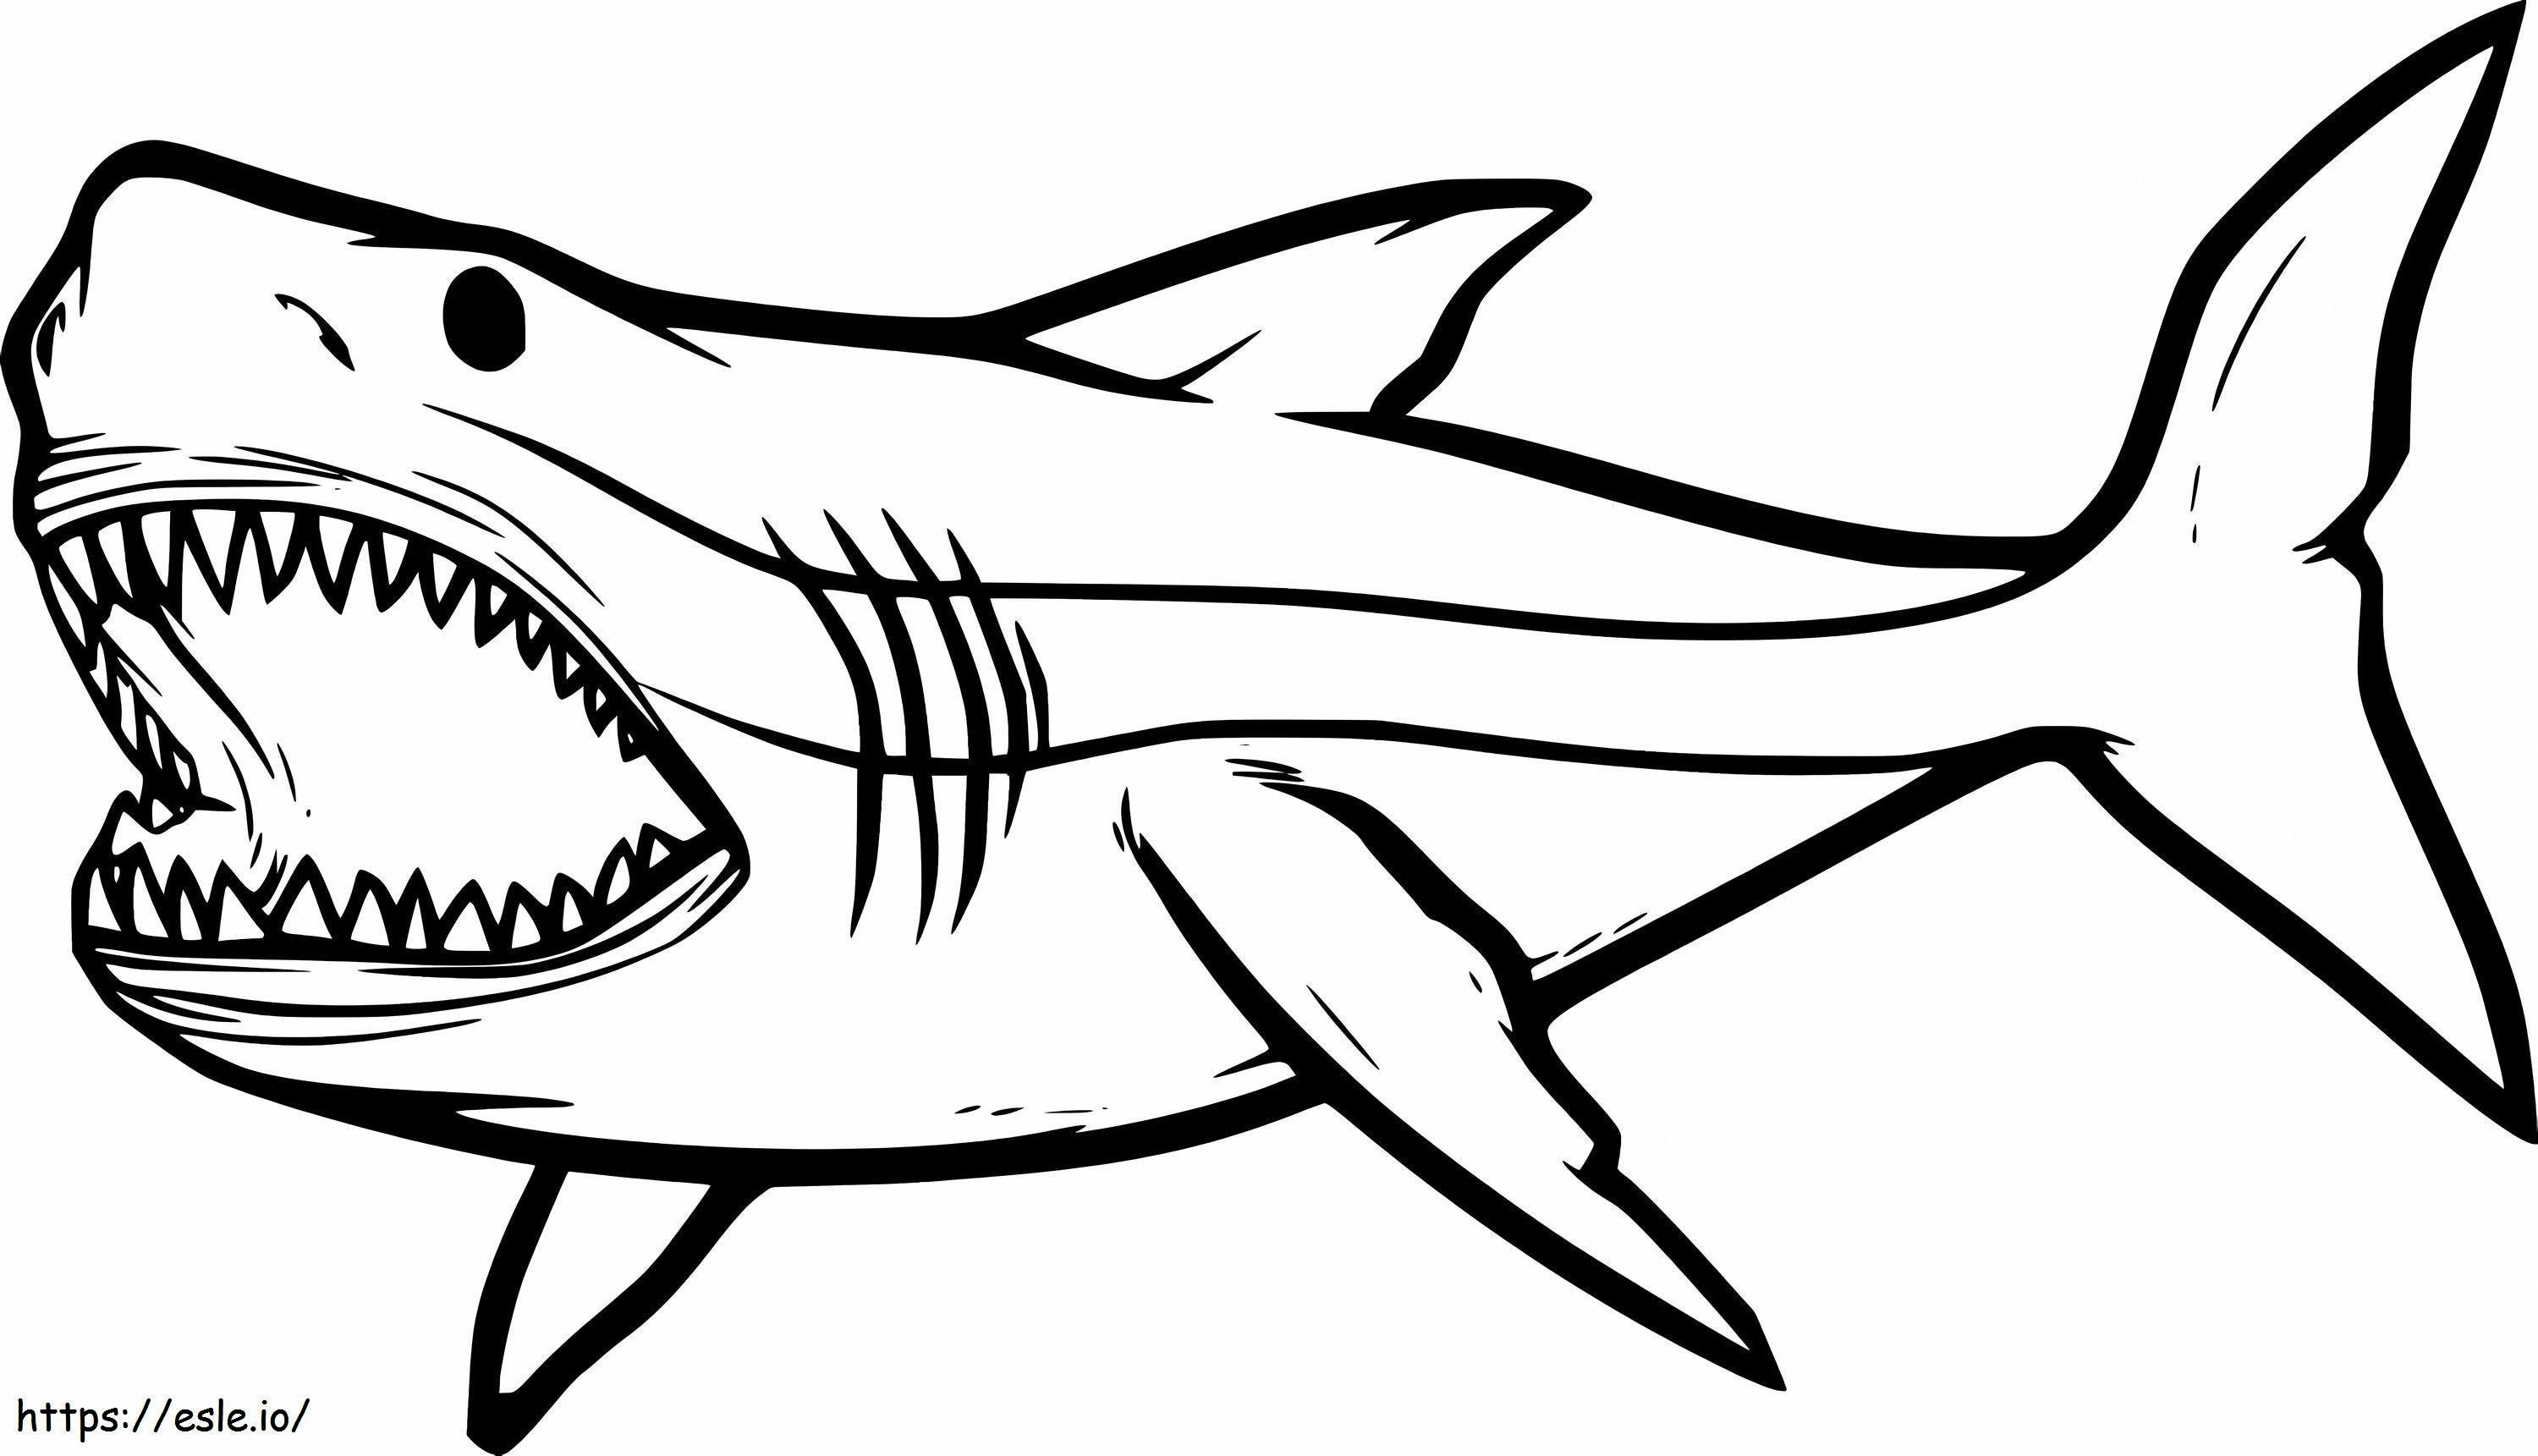 Coloriage Dessin de requin à imprimer dessin